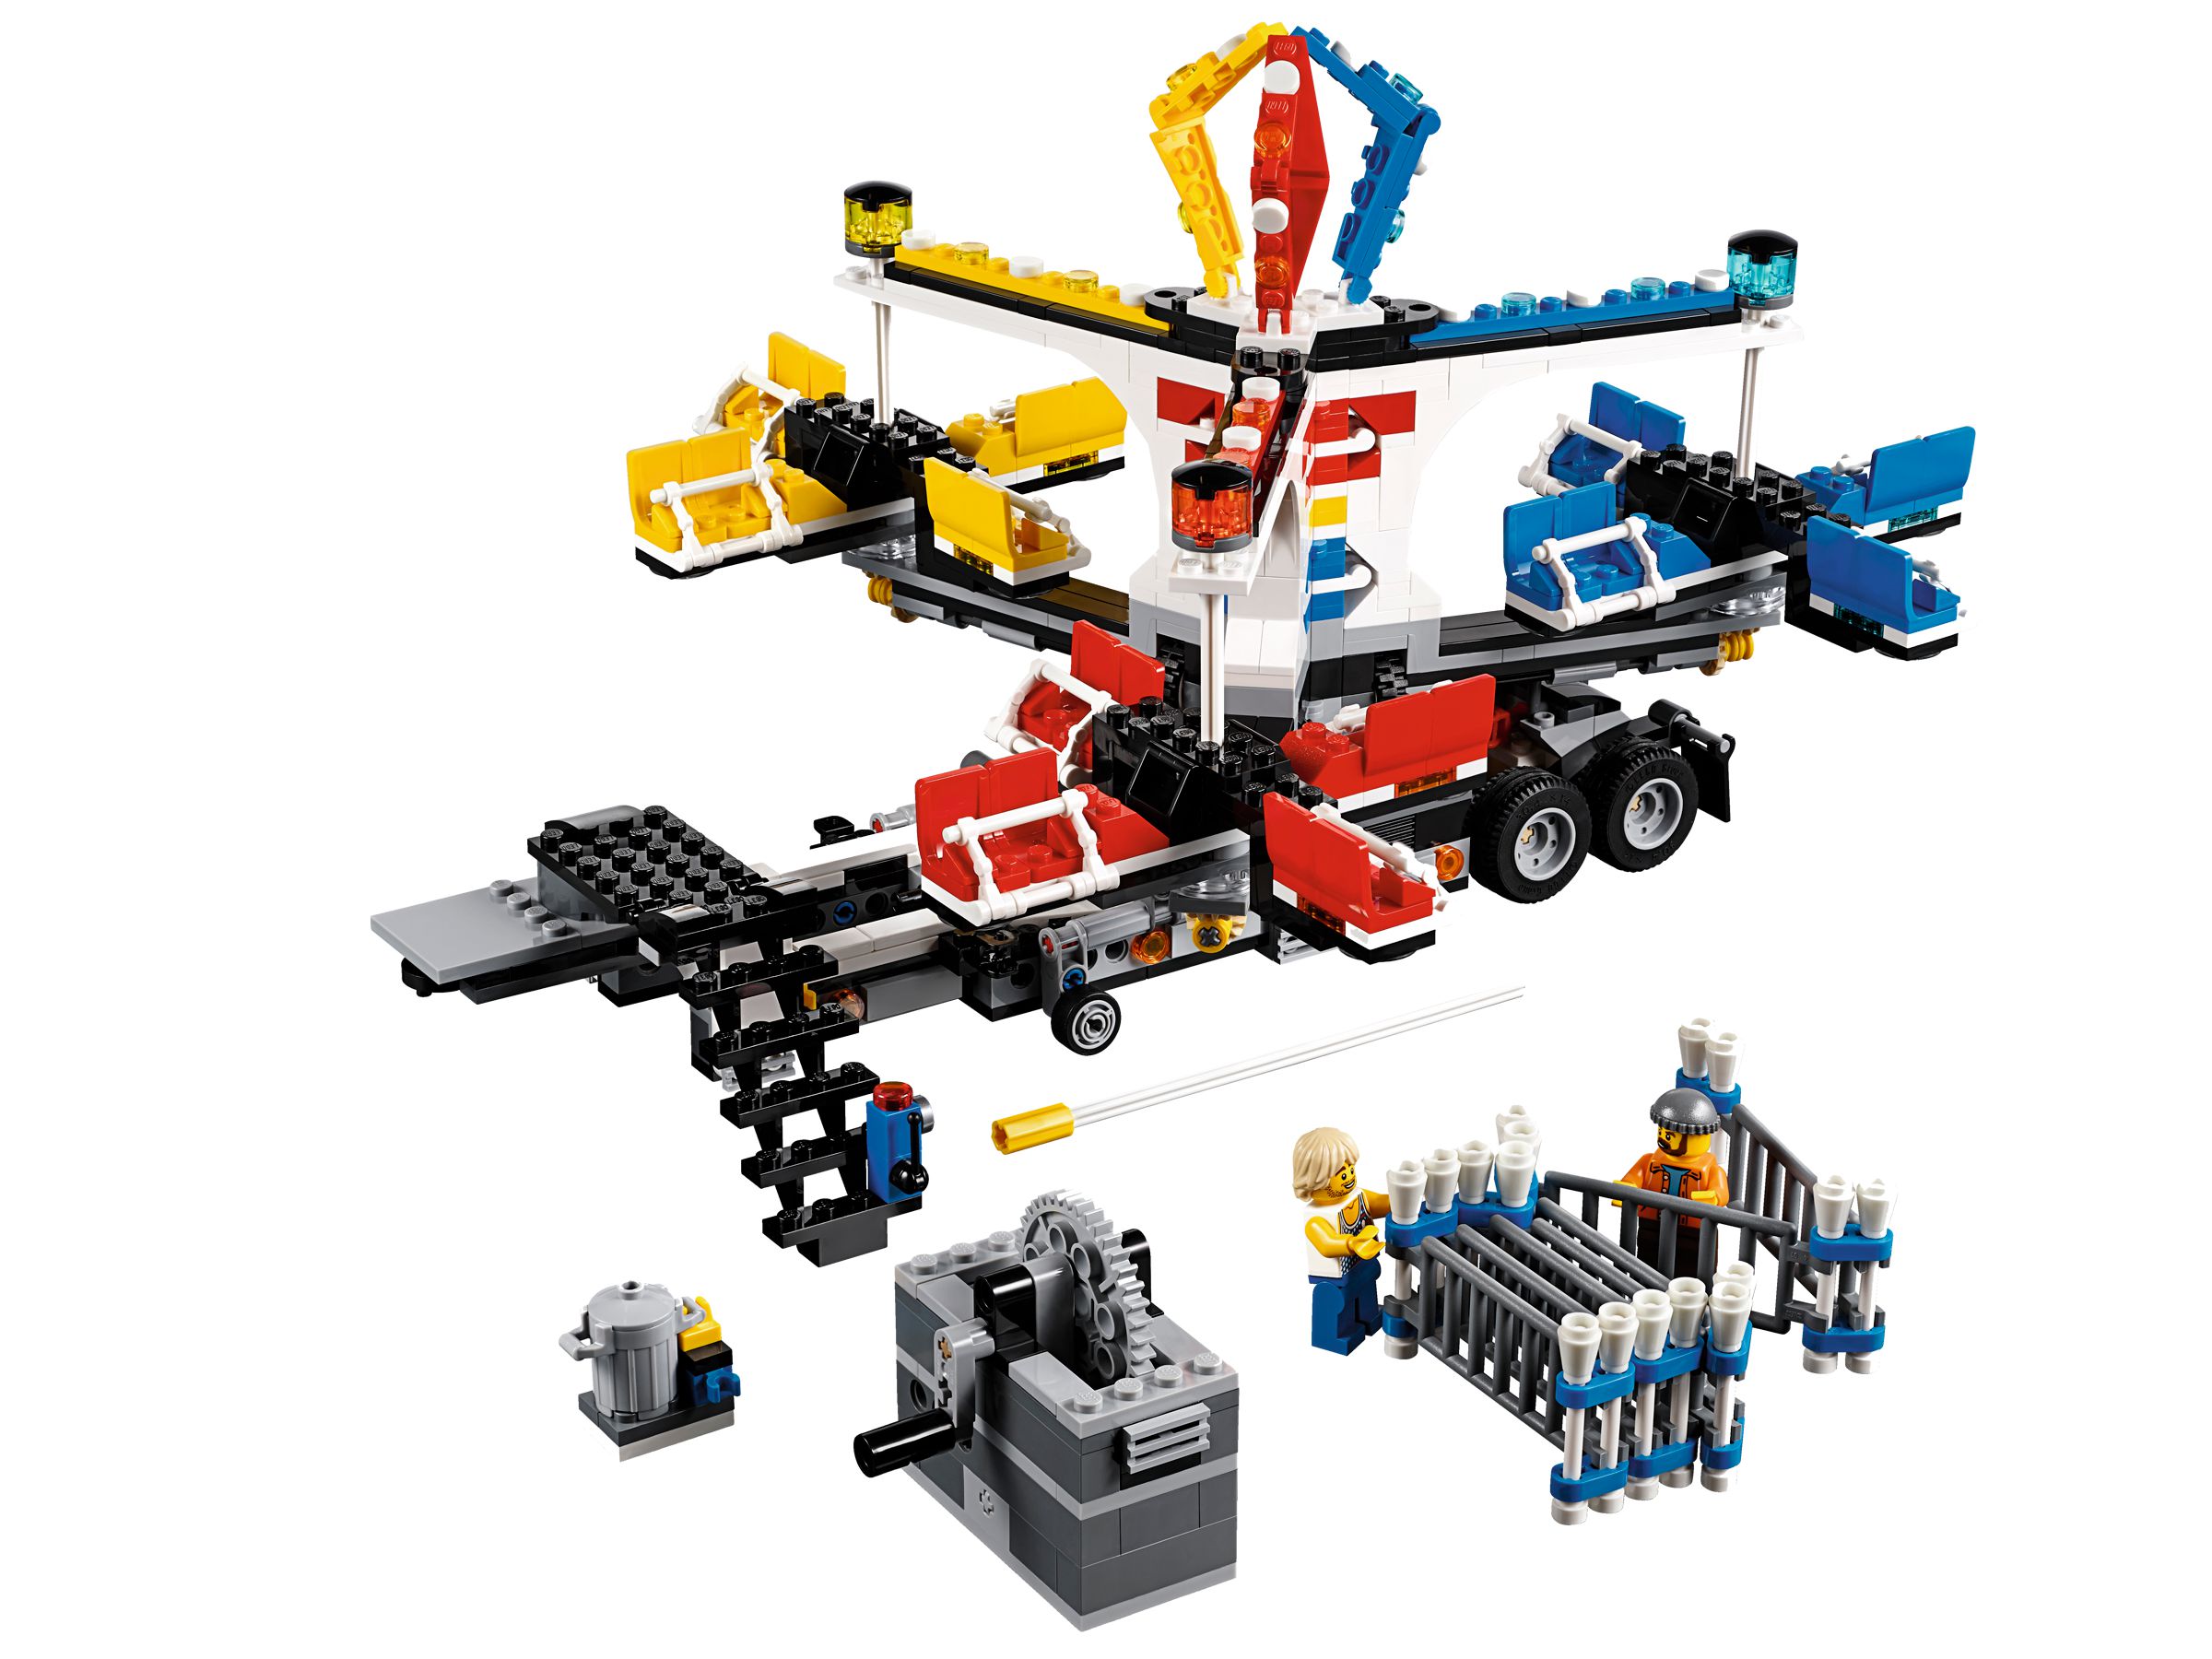 LEGO Advanced Models 10244 Jahrmarkt-Fahrgeschäft LEGO_10244_alt6.jpg